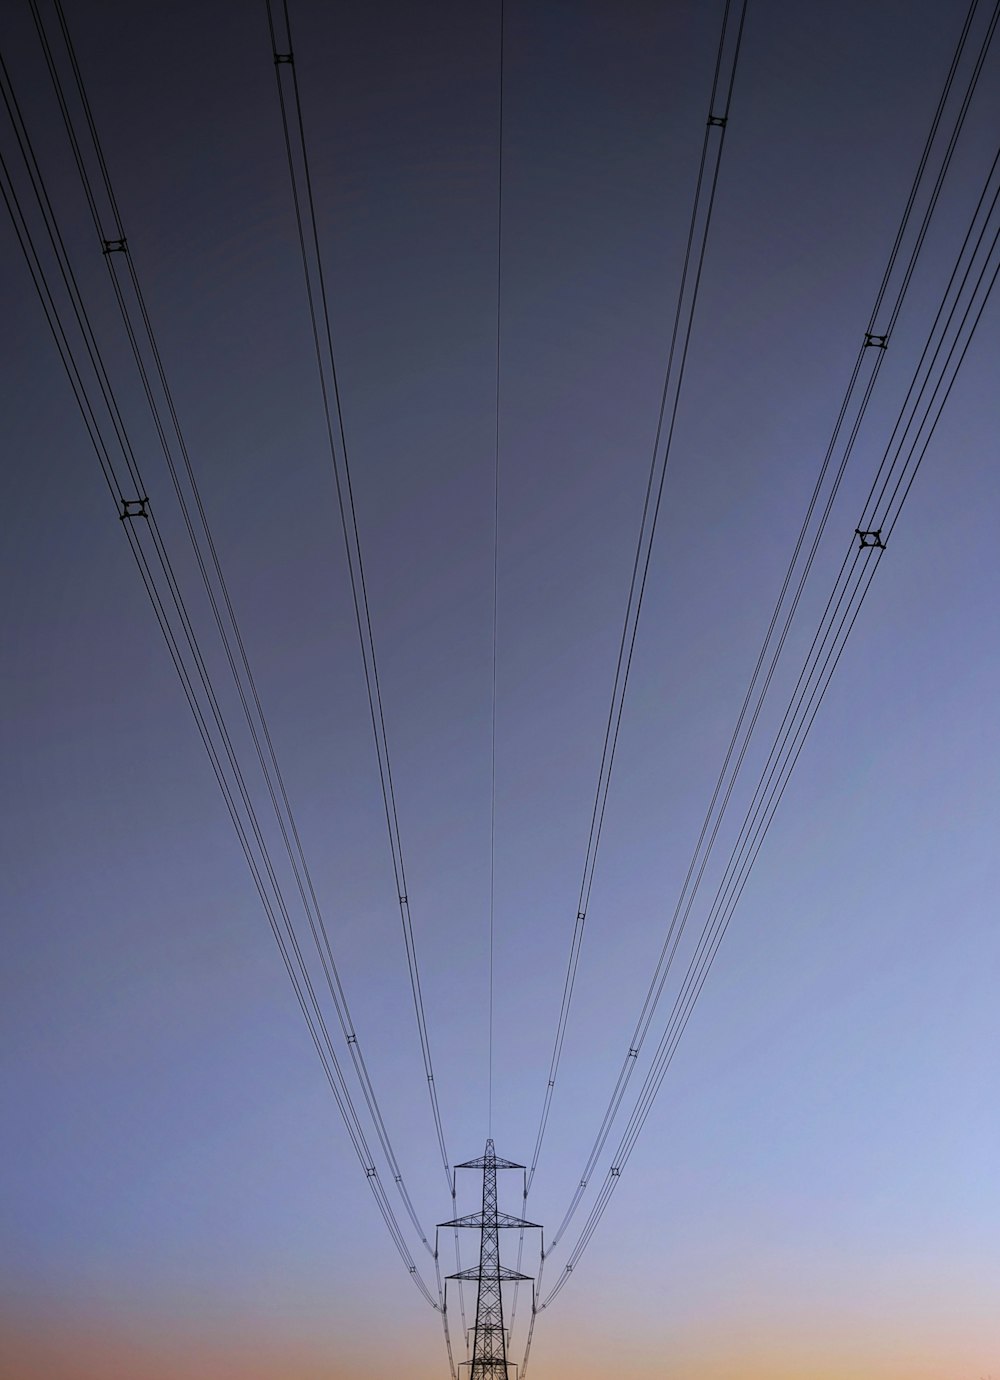 black electric wires under blue sky